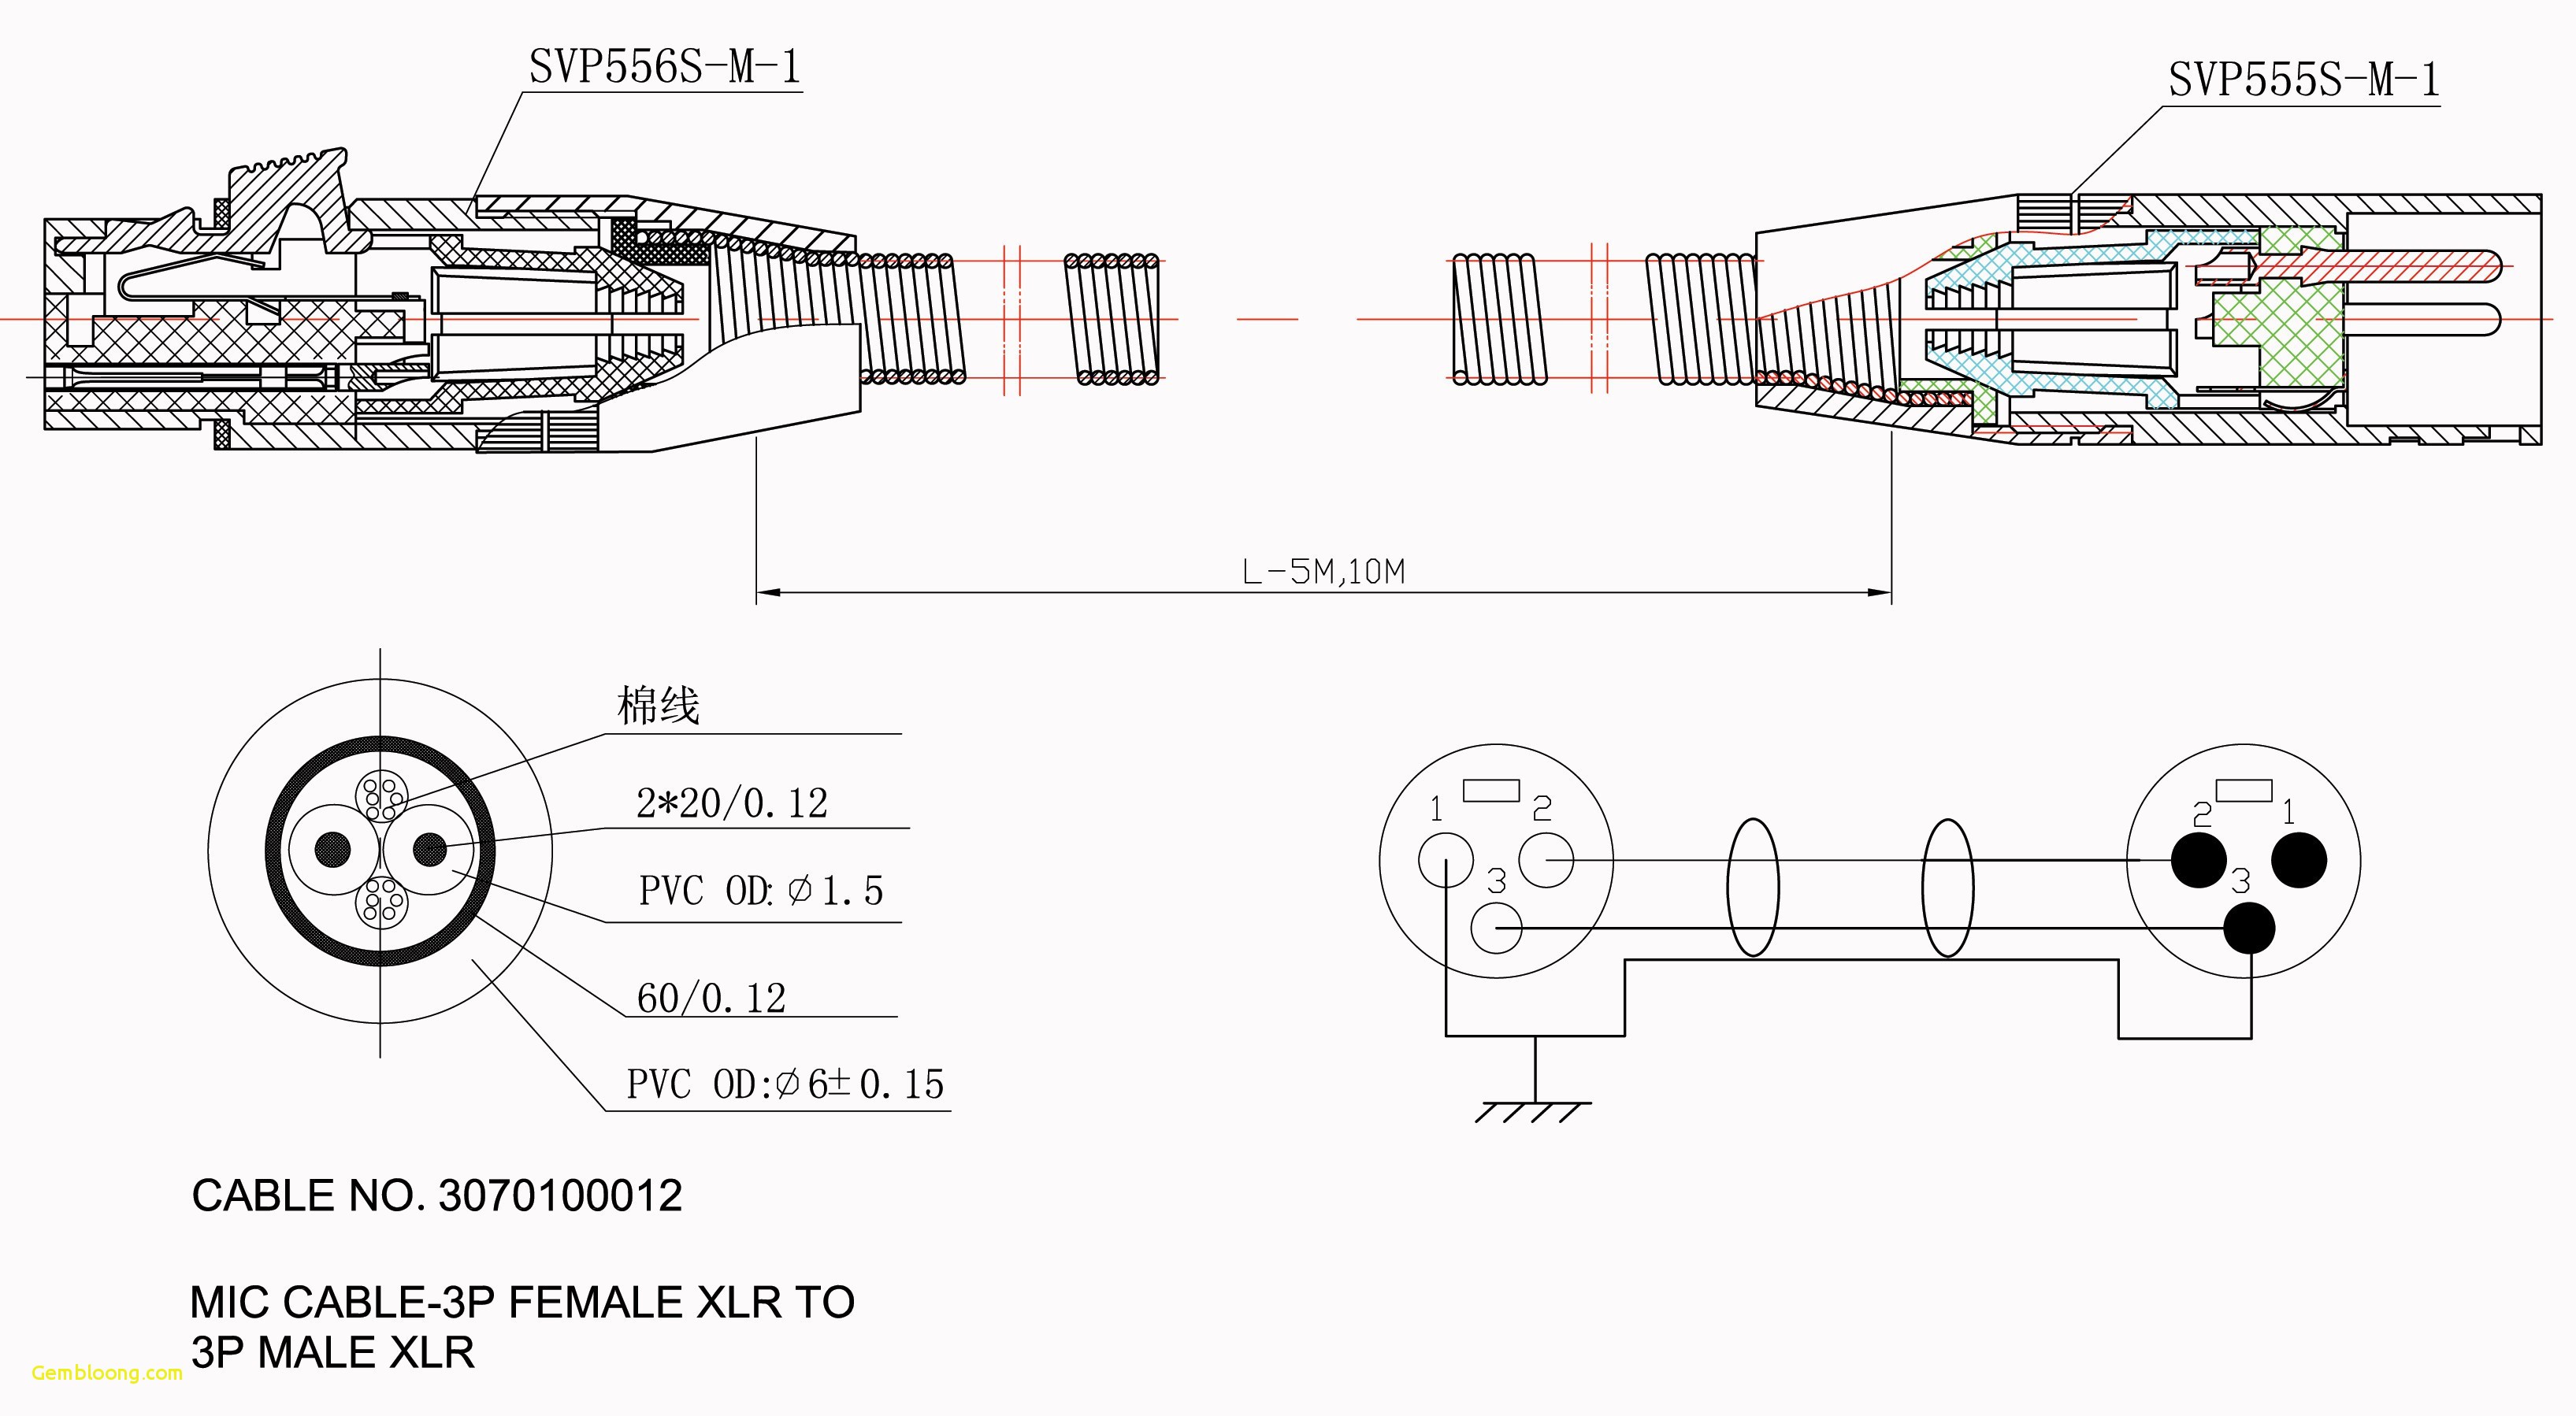 Cb550 Wiring Diagram 40 2001 Honda Shadow Spirit 750 Wiring Diagram Download – Wiring Diagram Of Cb550 Wiring Diagram